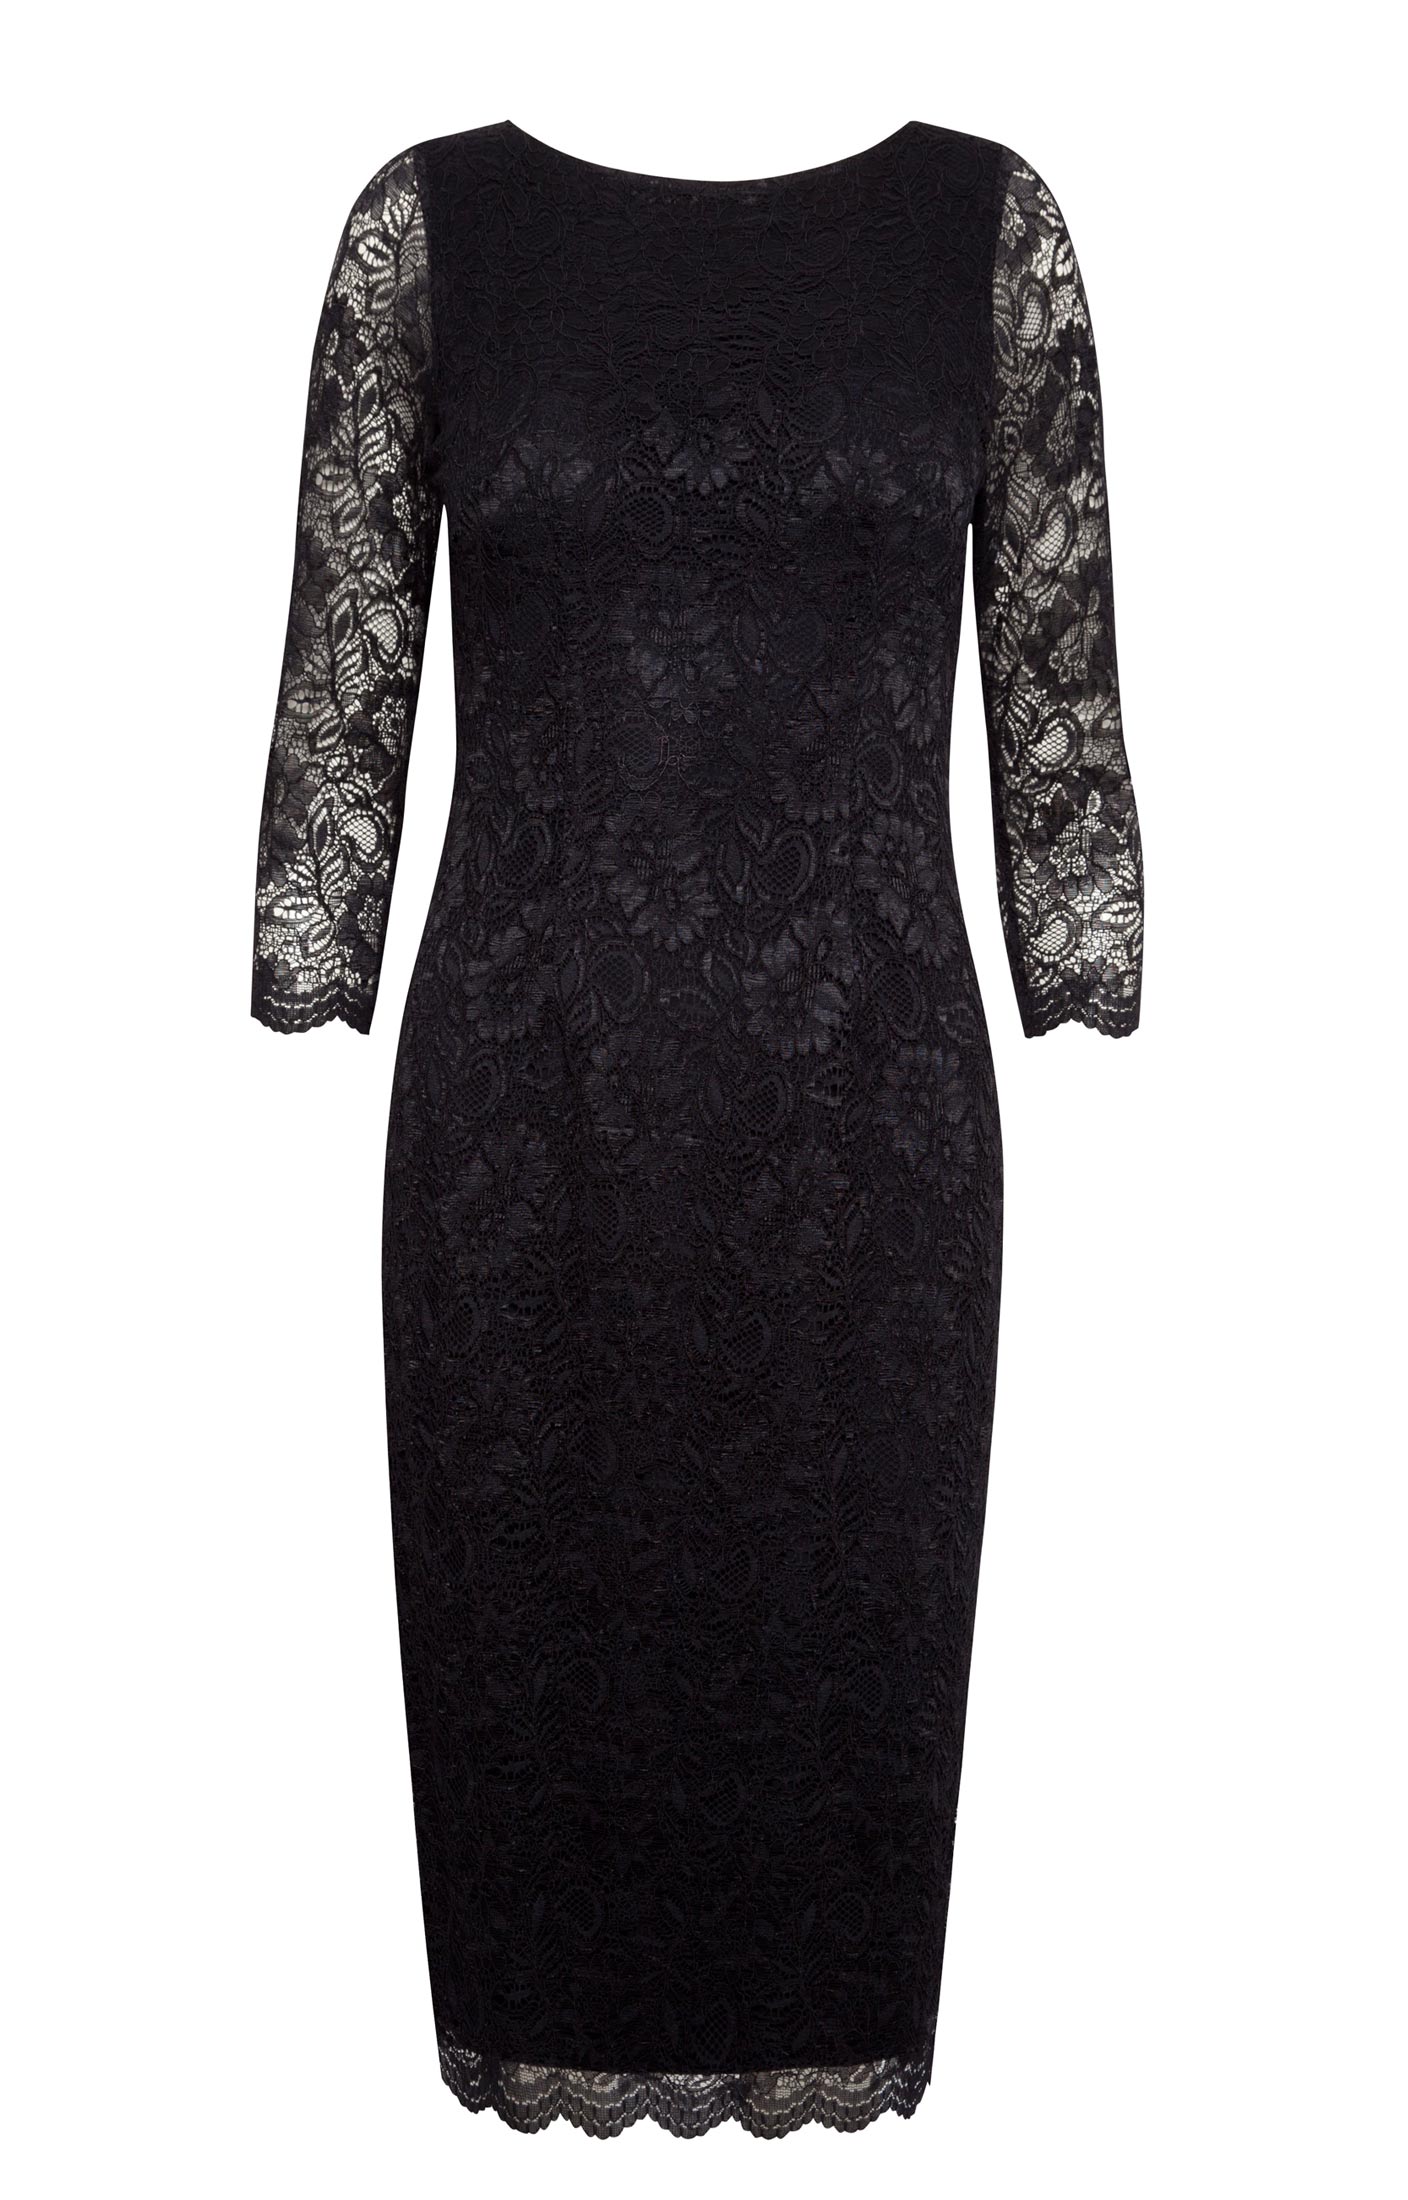 Katherine Lace Occasion Dress (Black) - Evening Dresses, Occasion Wear ...